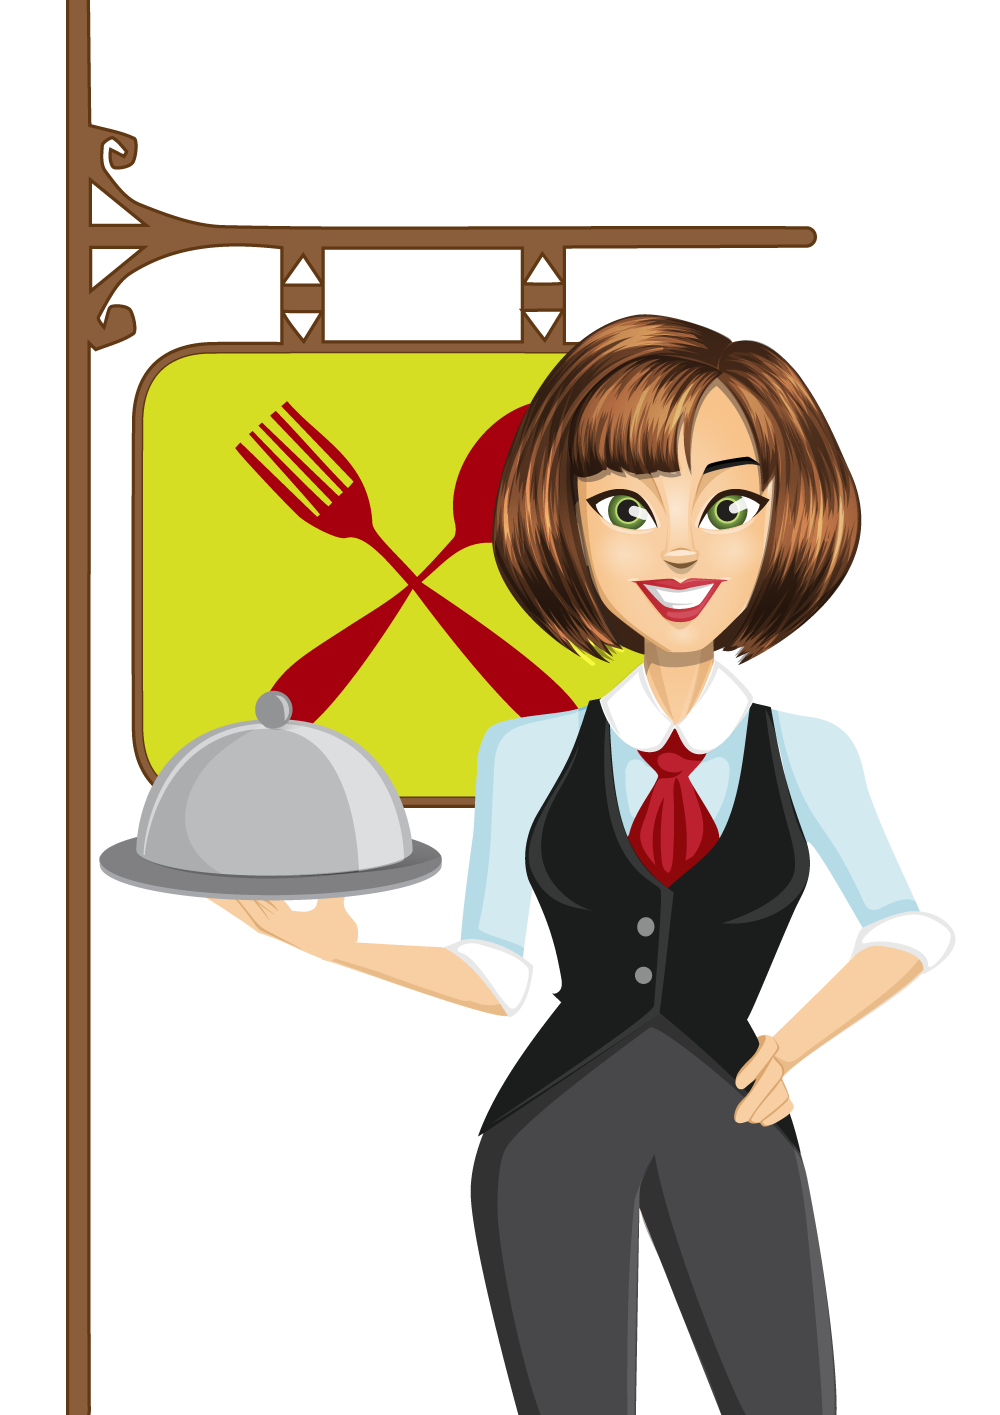 (RF) Waitress Clipart .